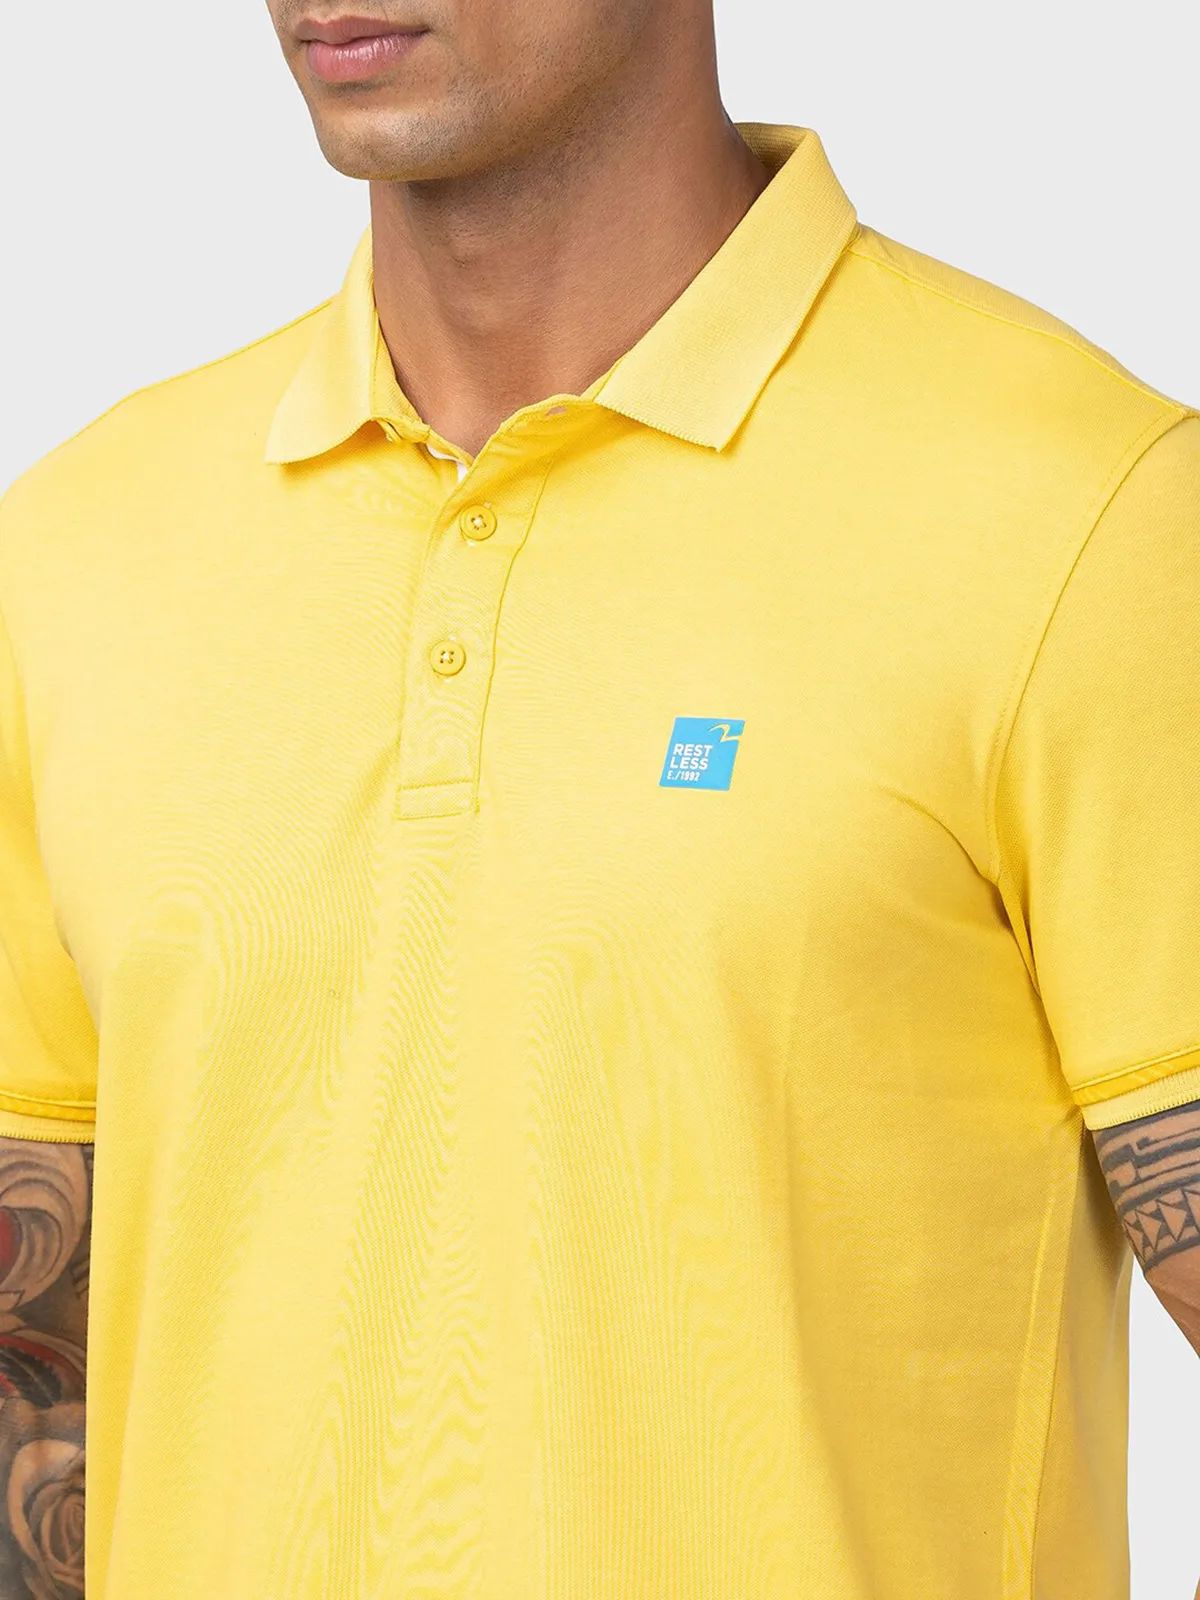 Spykar yellow plain cotton t shirt